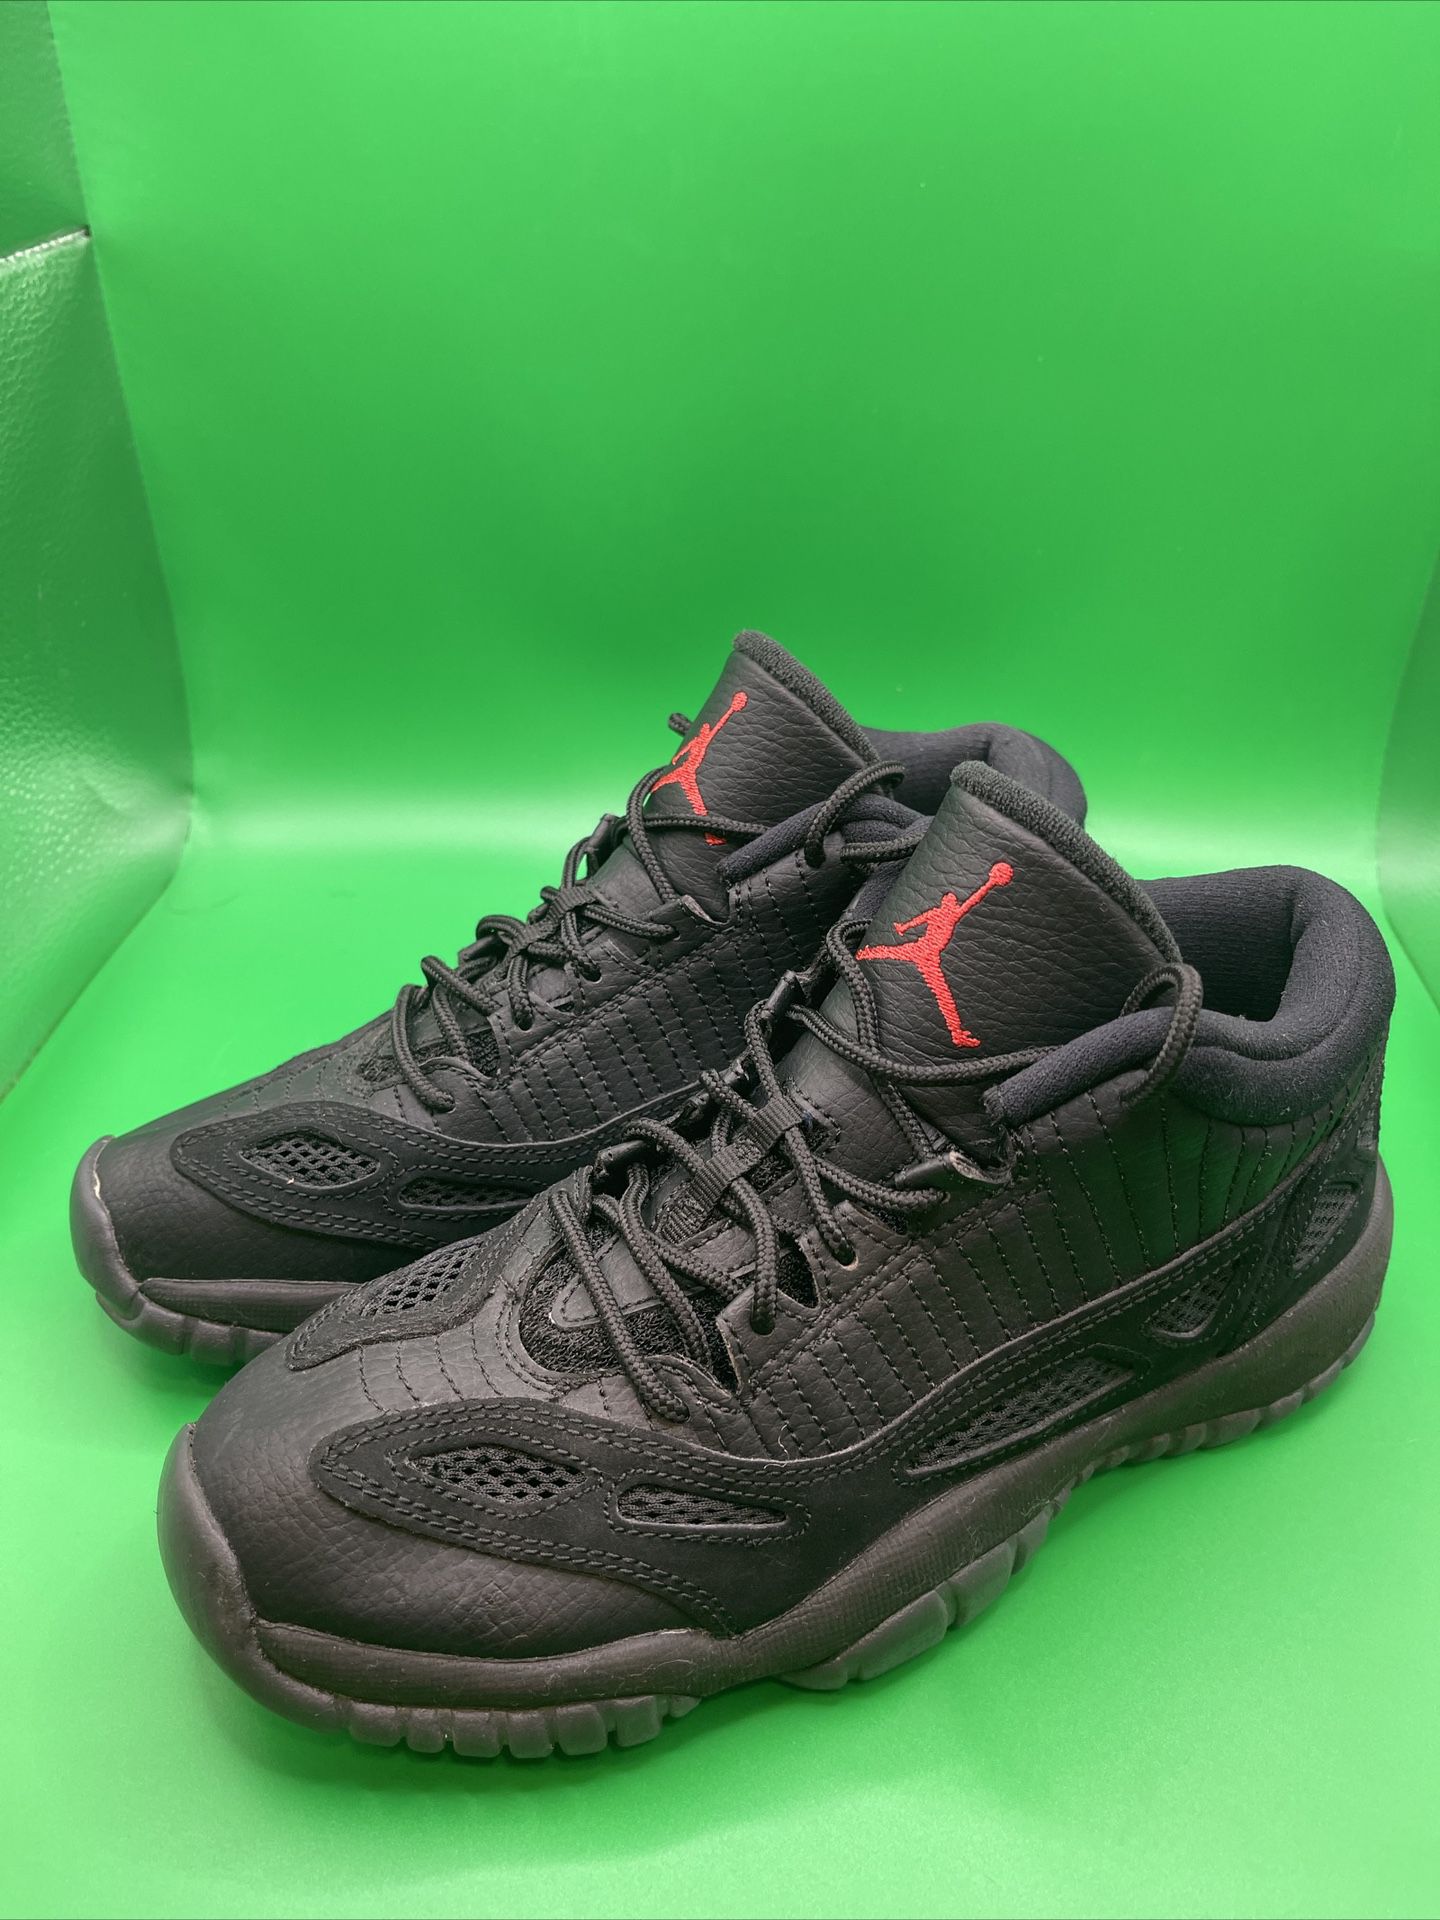 Nike Air Jordan 11 Retro Low Referee 768873-003 Lace Up Kids Black Size 4.5 Y